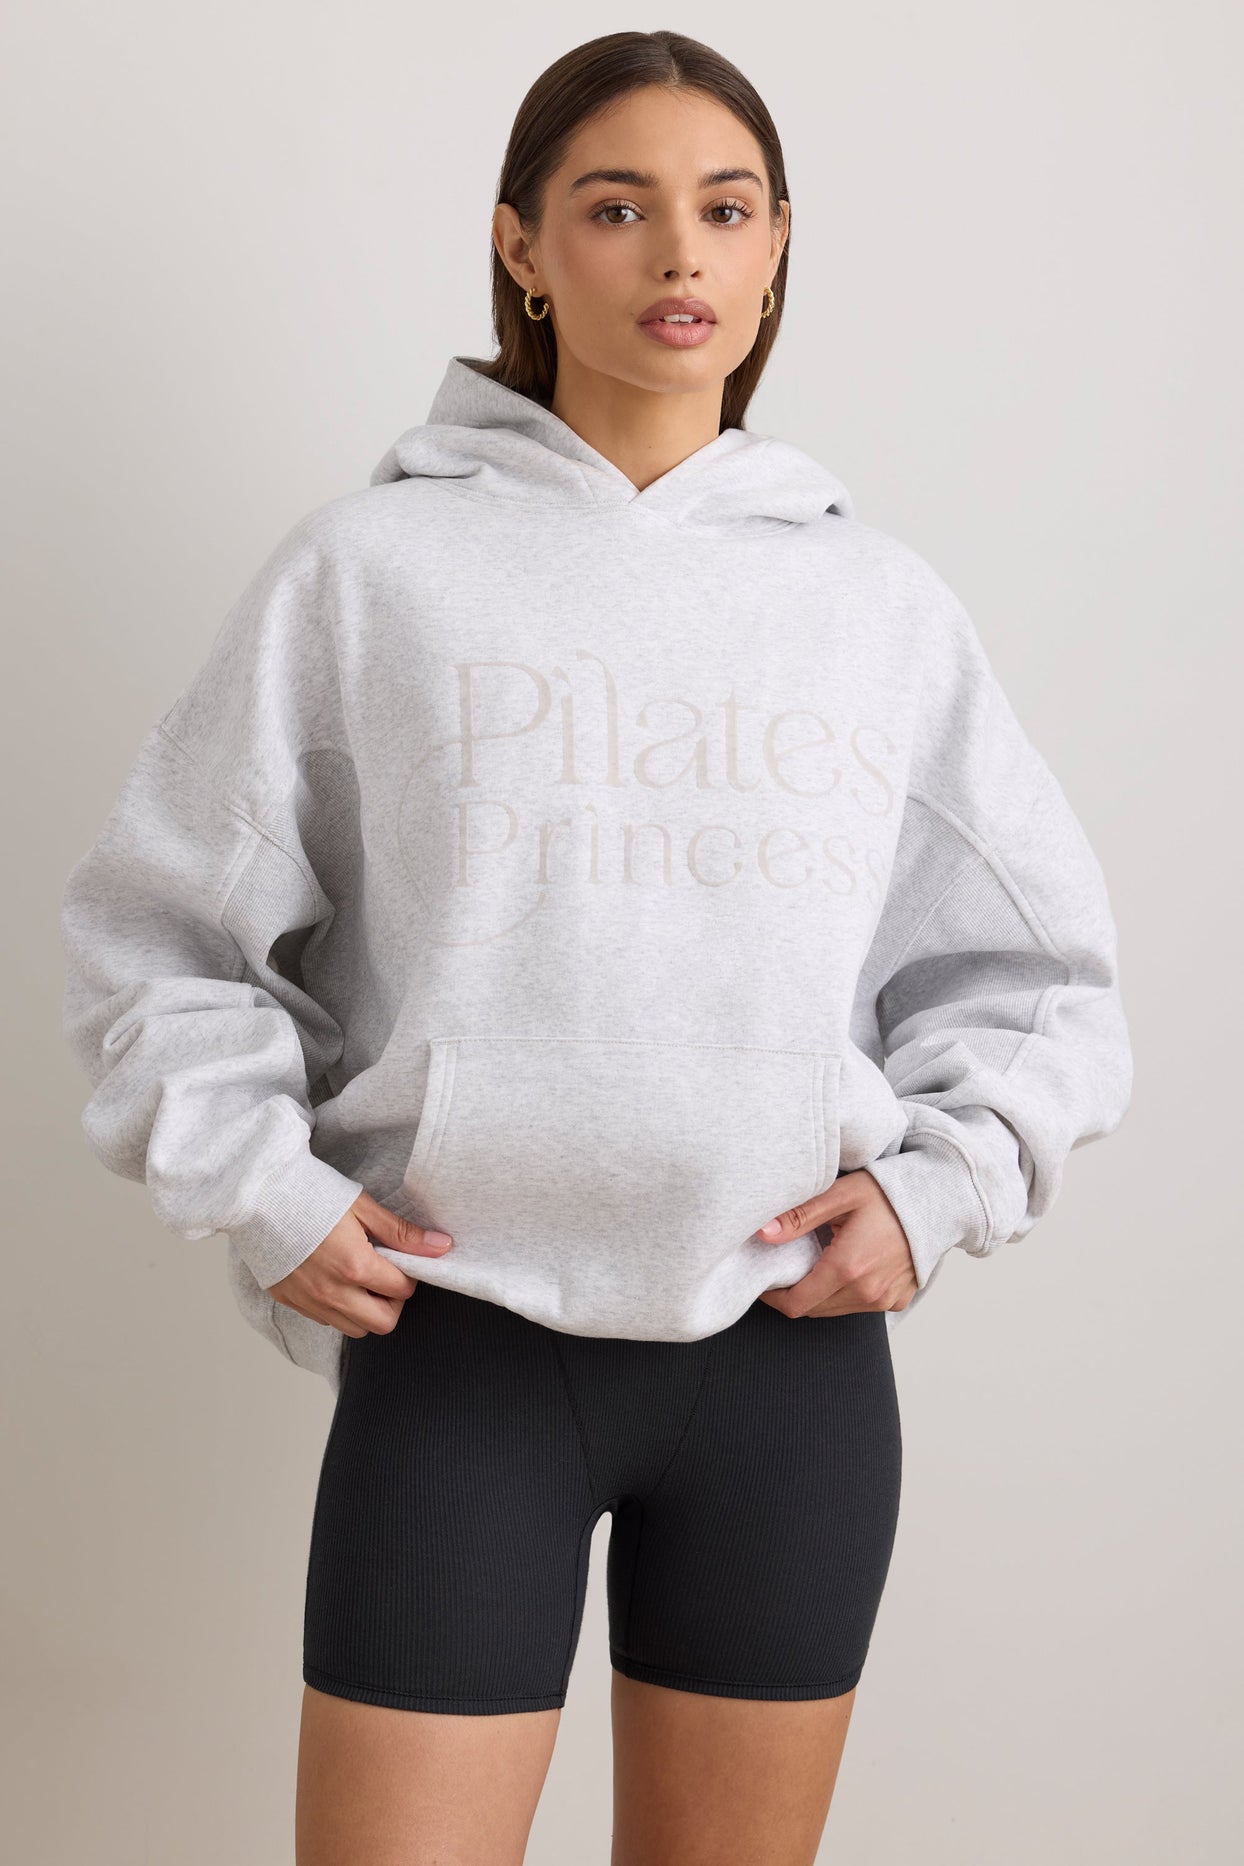 Pilates Princess Oversized Hooded Sweatshirt in Light Grey